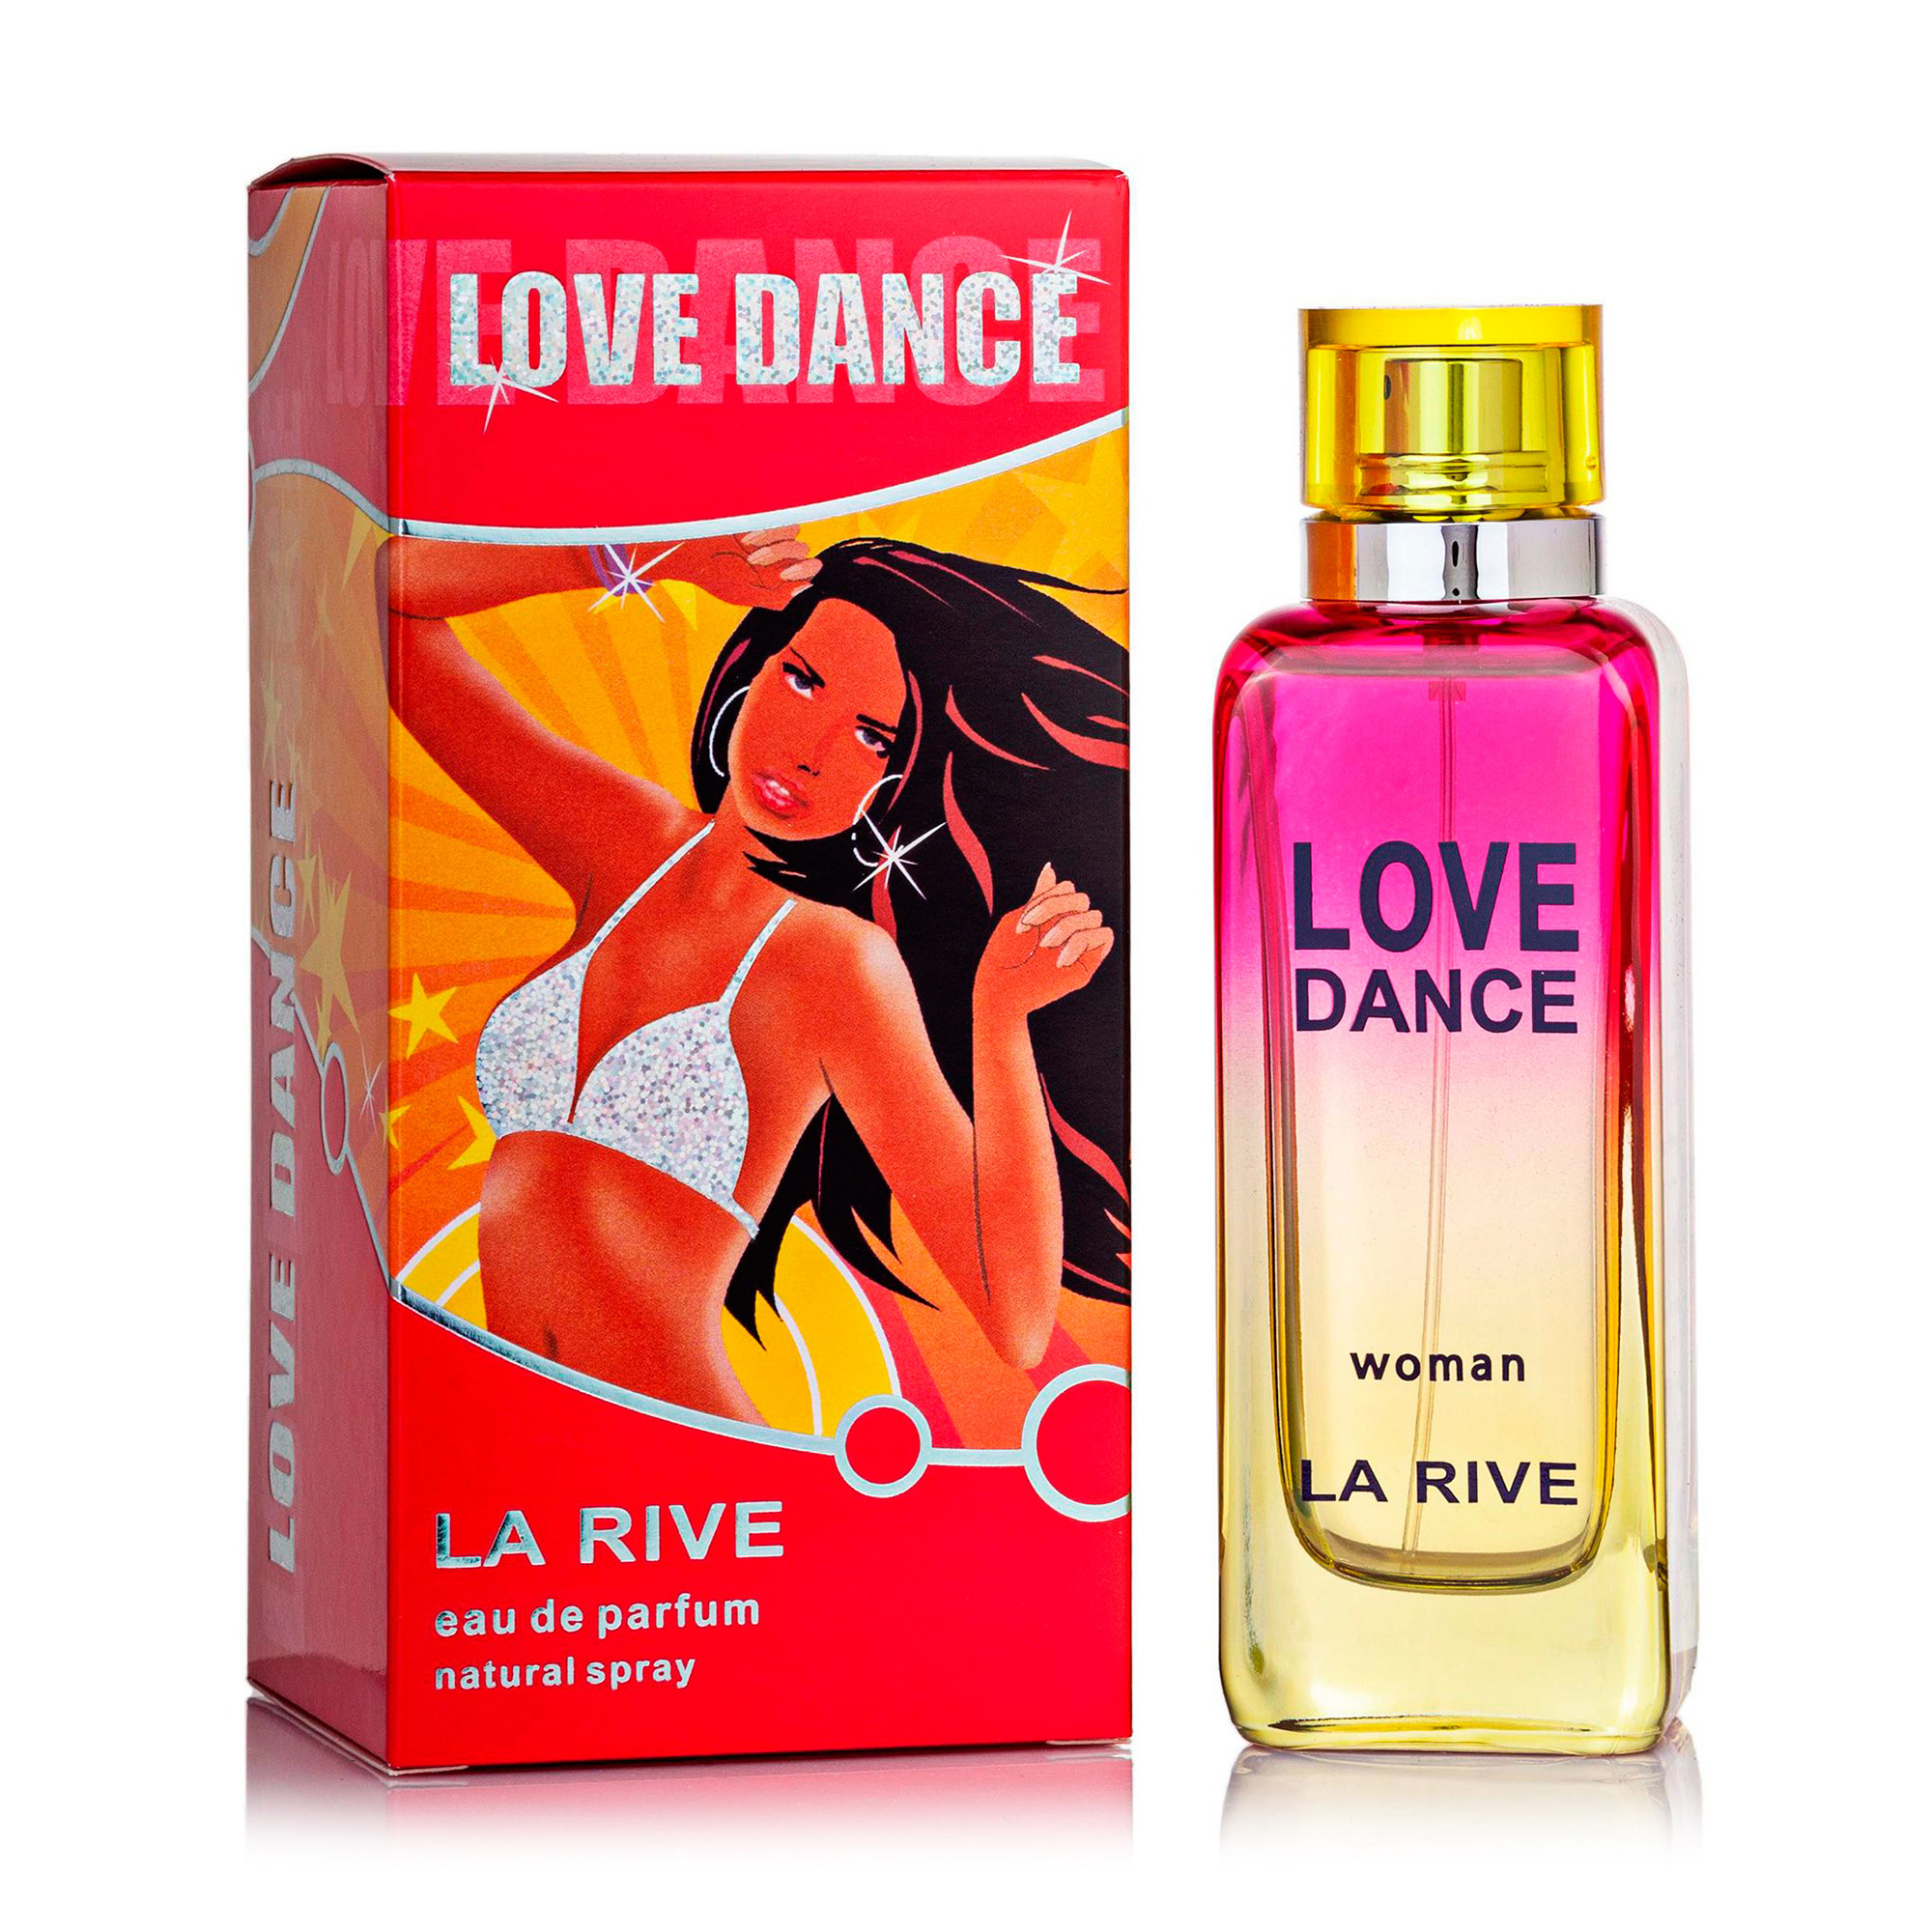 Любимая туалетная вода. La Rive туалетная вода женская. La Rive духи женские красные. Туалетная женская вода лов дэнс. Love Dance woman la Rive.